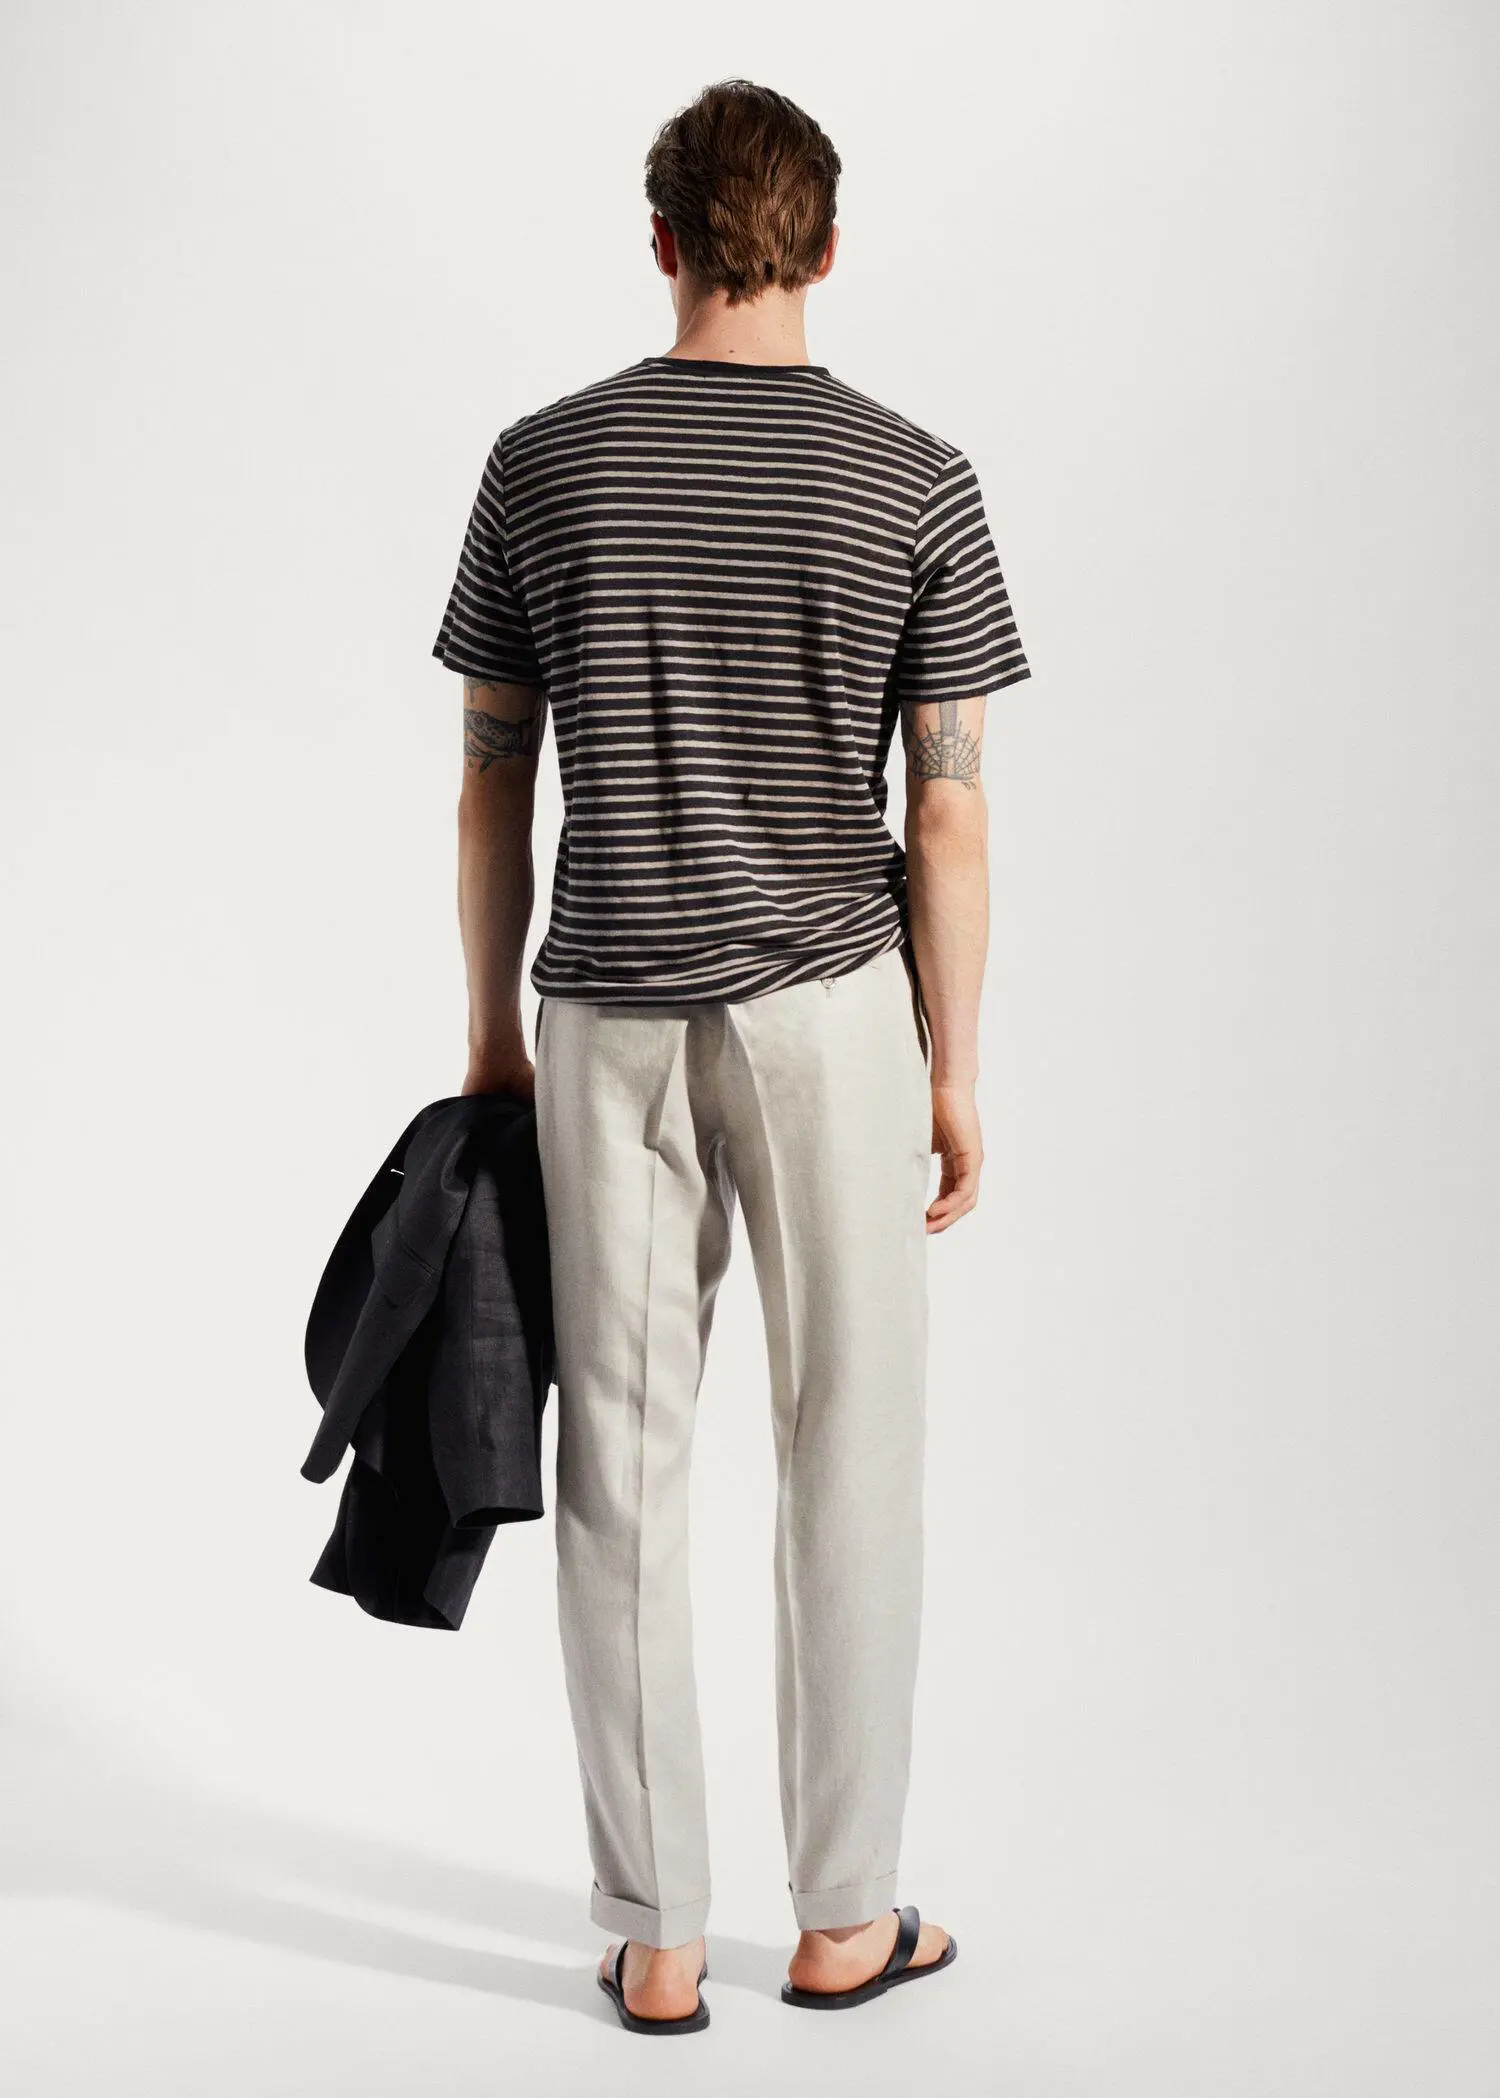 Mango 100% linen striped t-shirt. a man wearing a striped shirt and a jacket. 